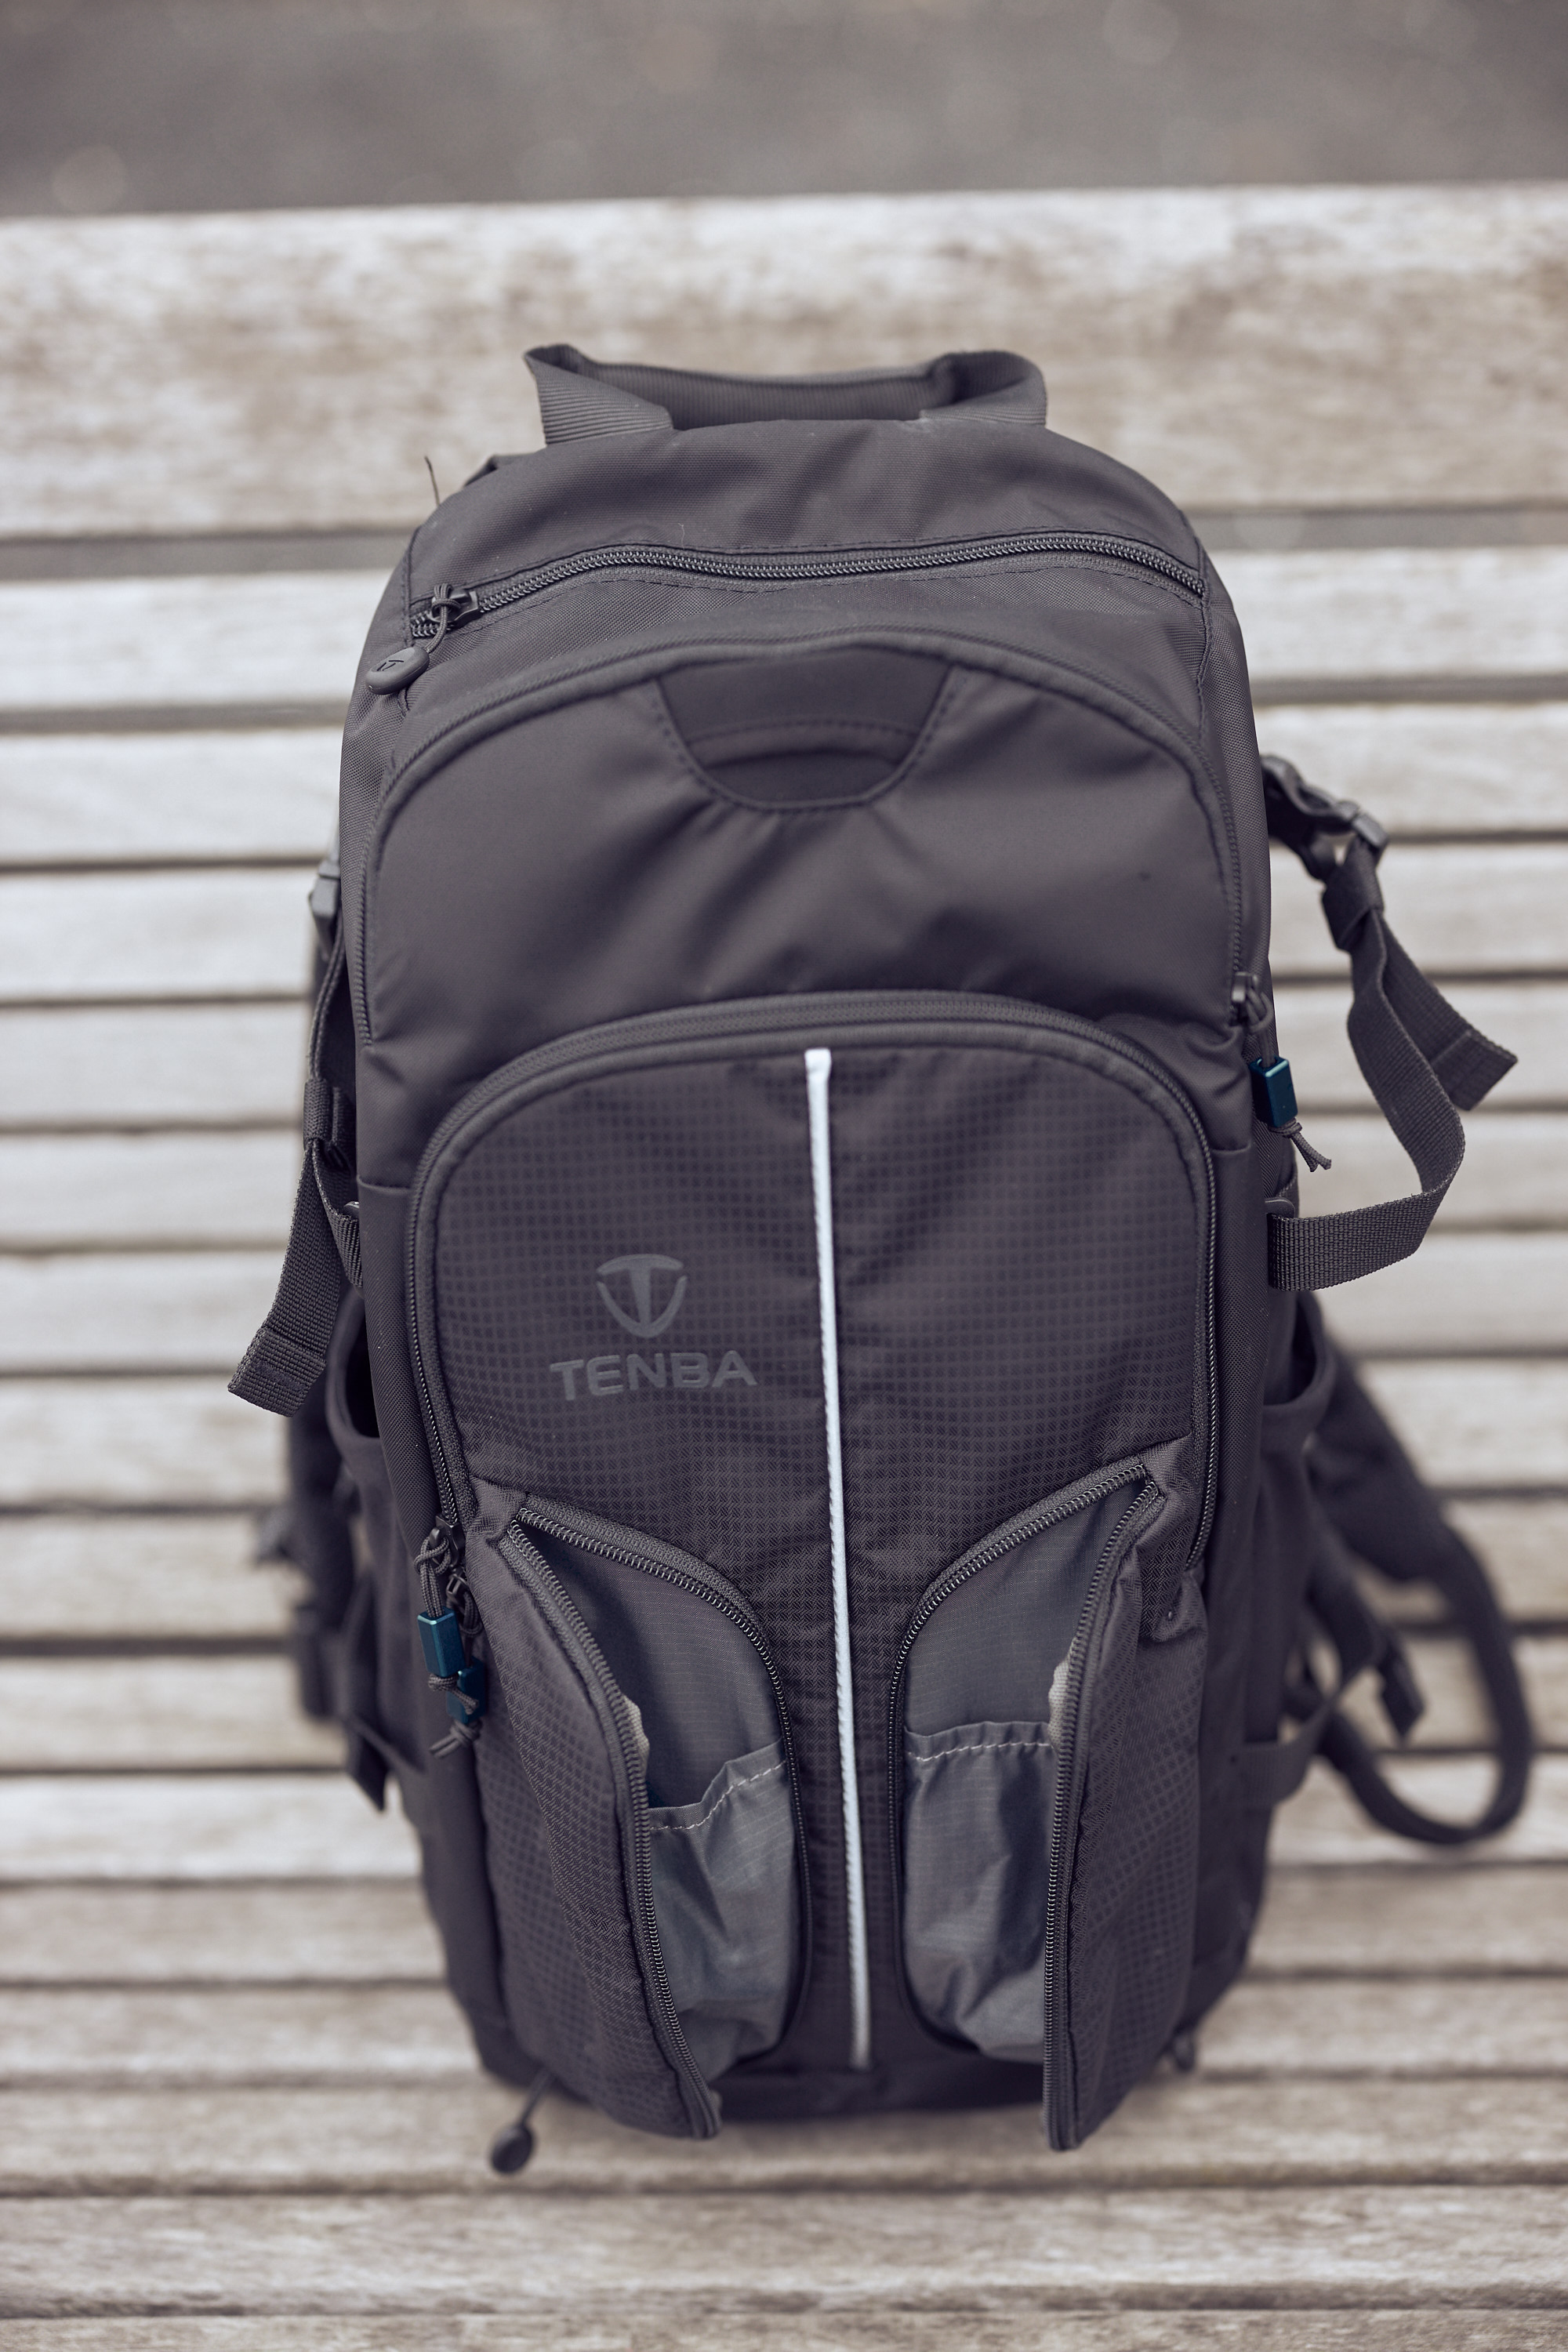 Review: Tenba Shootout 16L DSLR (The In-Between Backpack Bag)